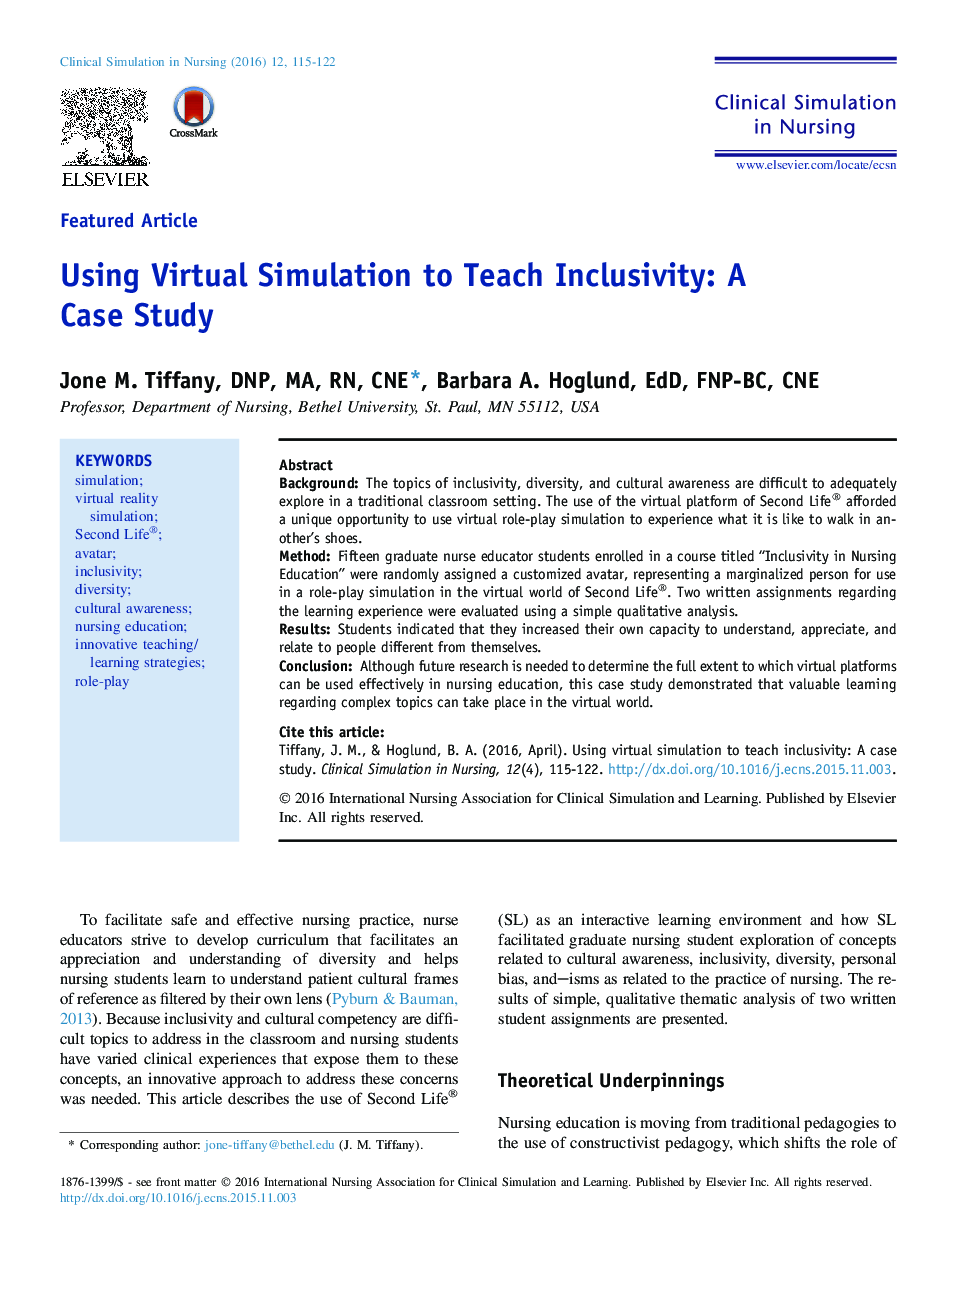 Using Virtual Simulation to Teach Inclusivity: A Case Study